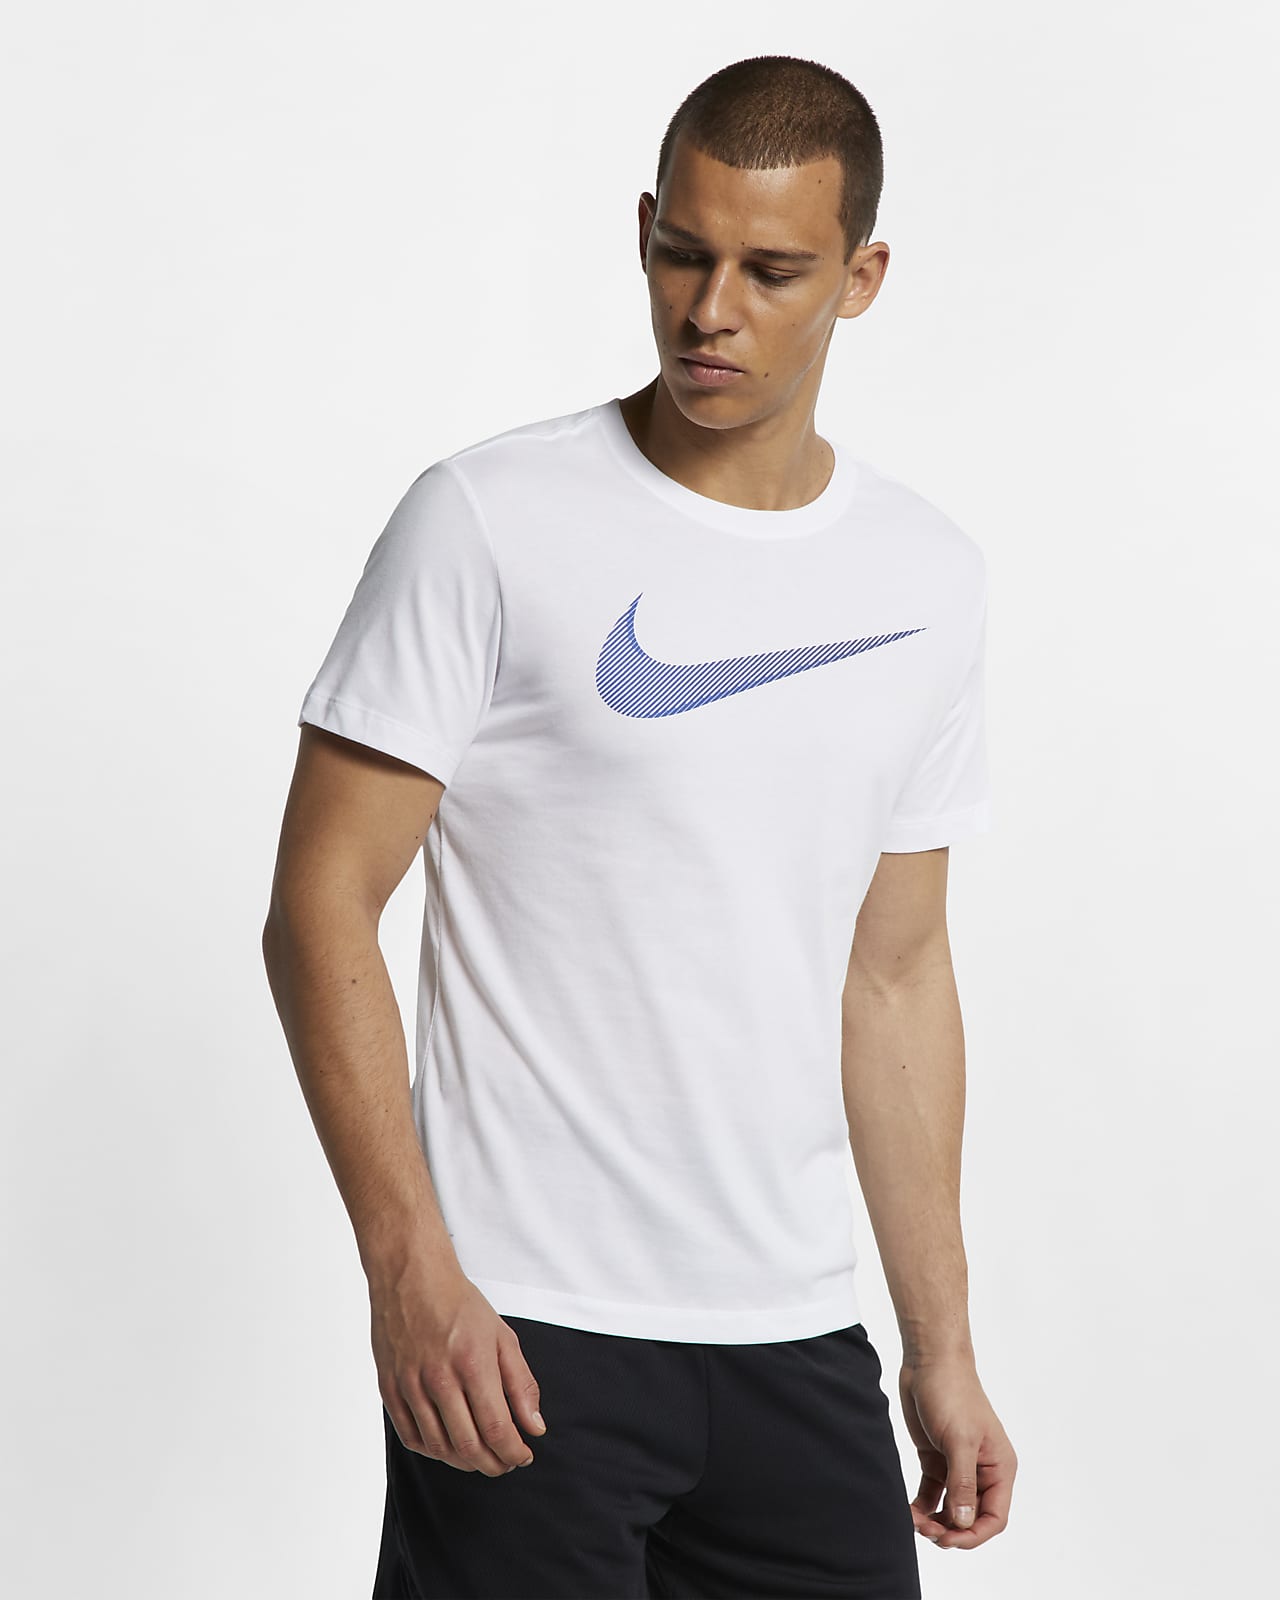 Nike Men's Training T-Shirt.